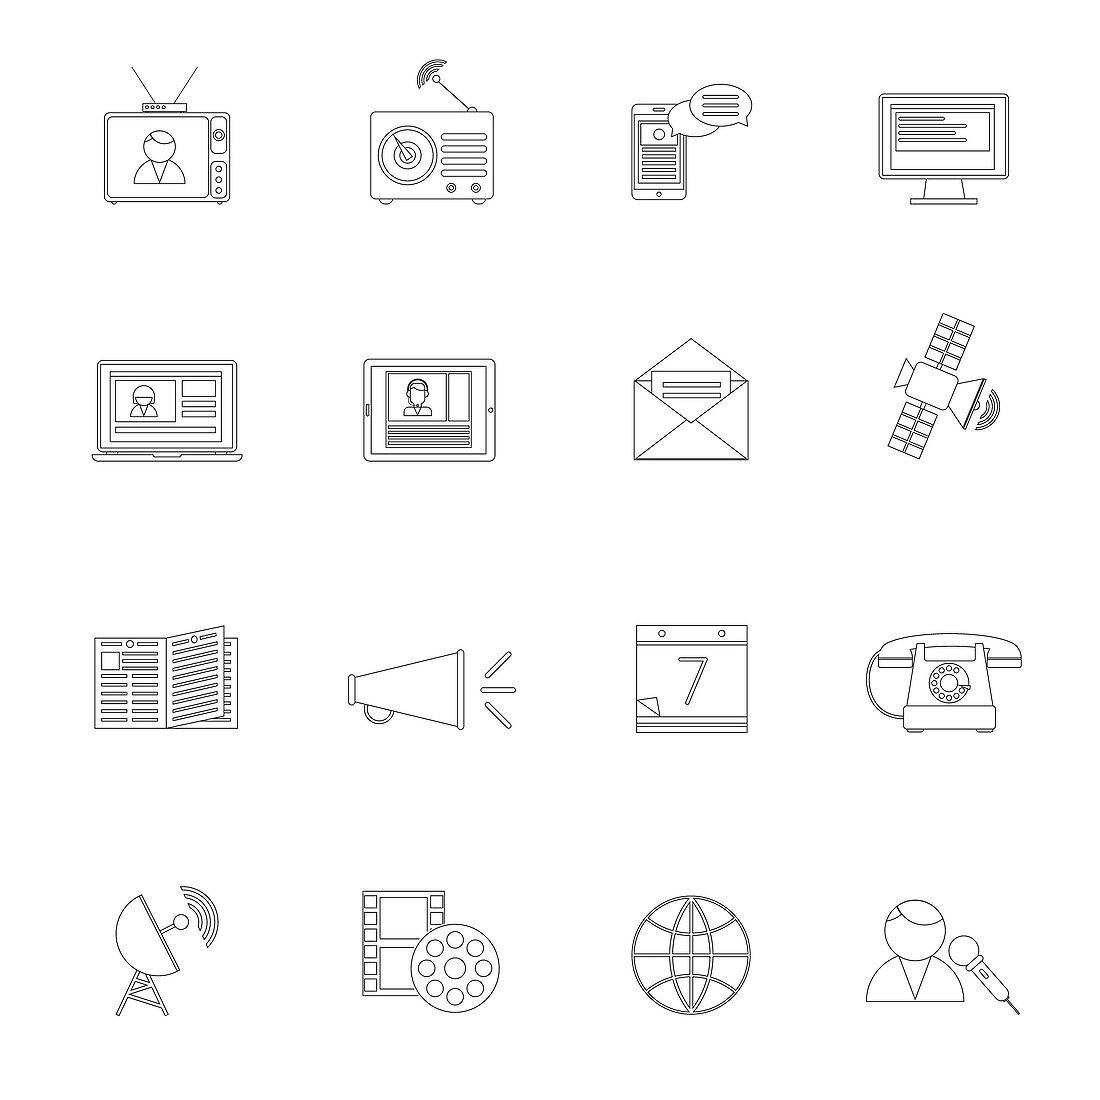 Media icons, illustration